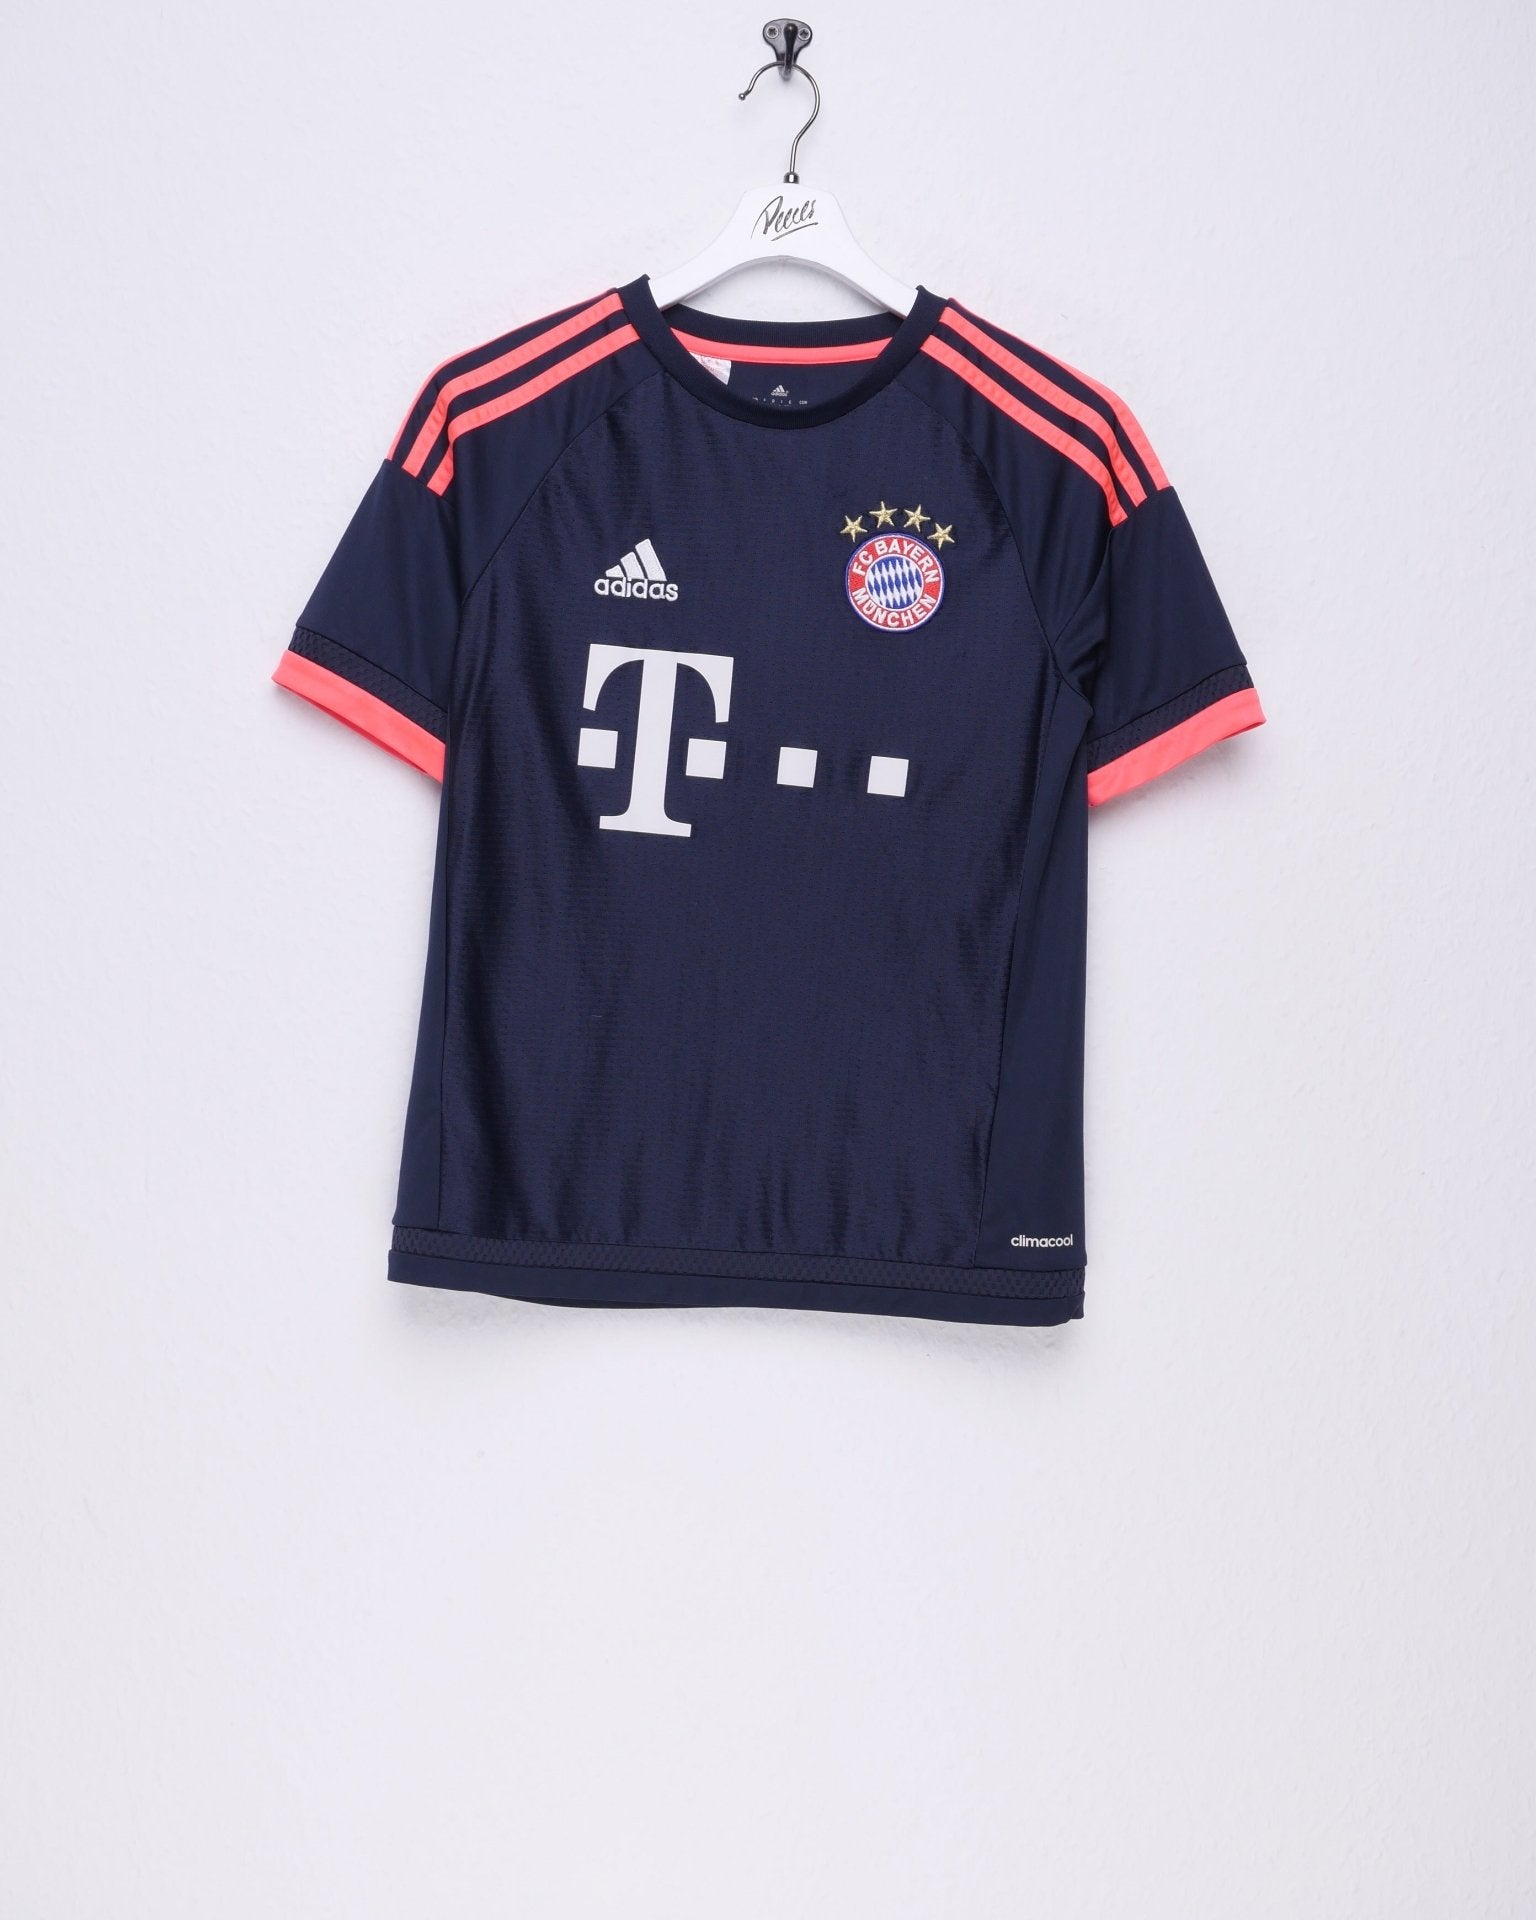 adidas embroidered Middle Logo 'Bayern Munich' Soccer Jersey Shirt - Peeces